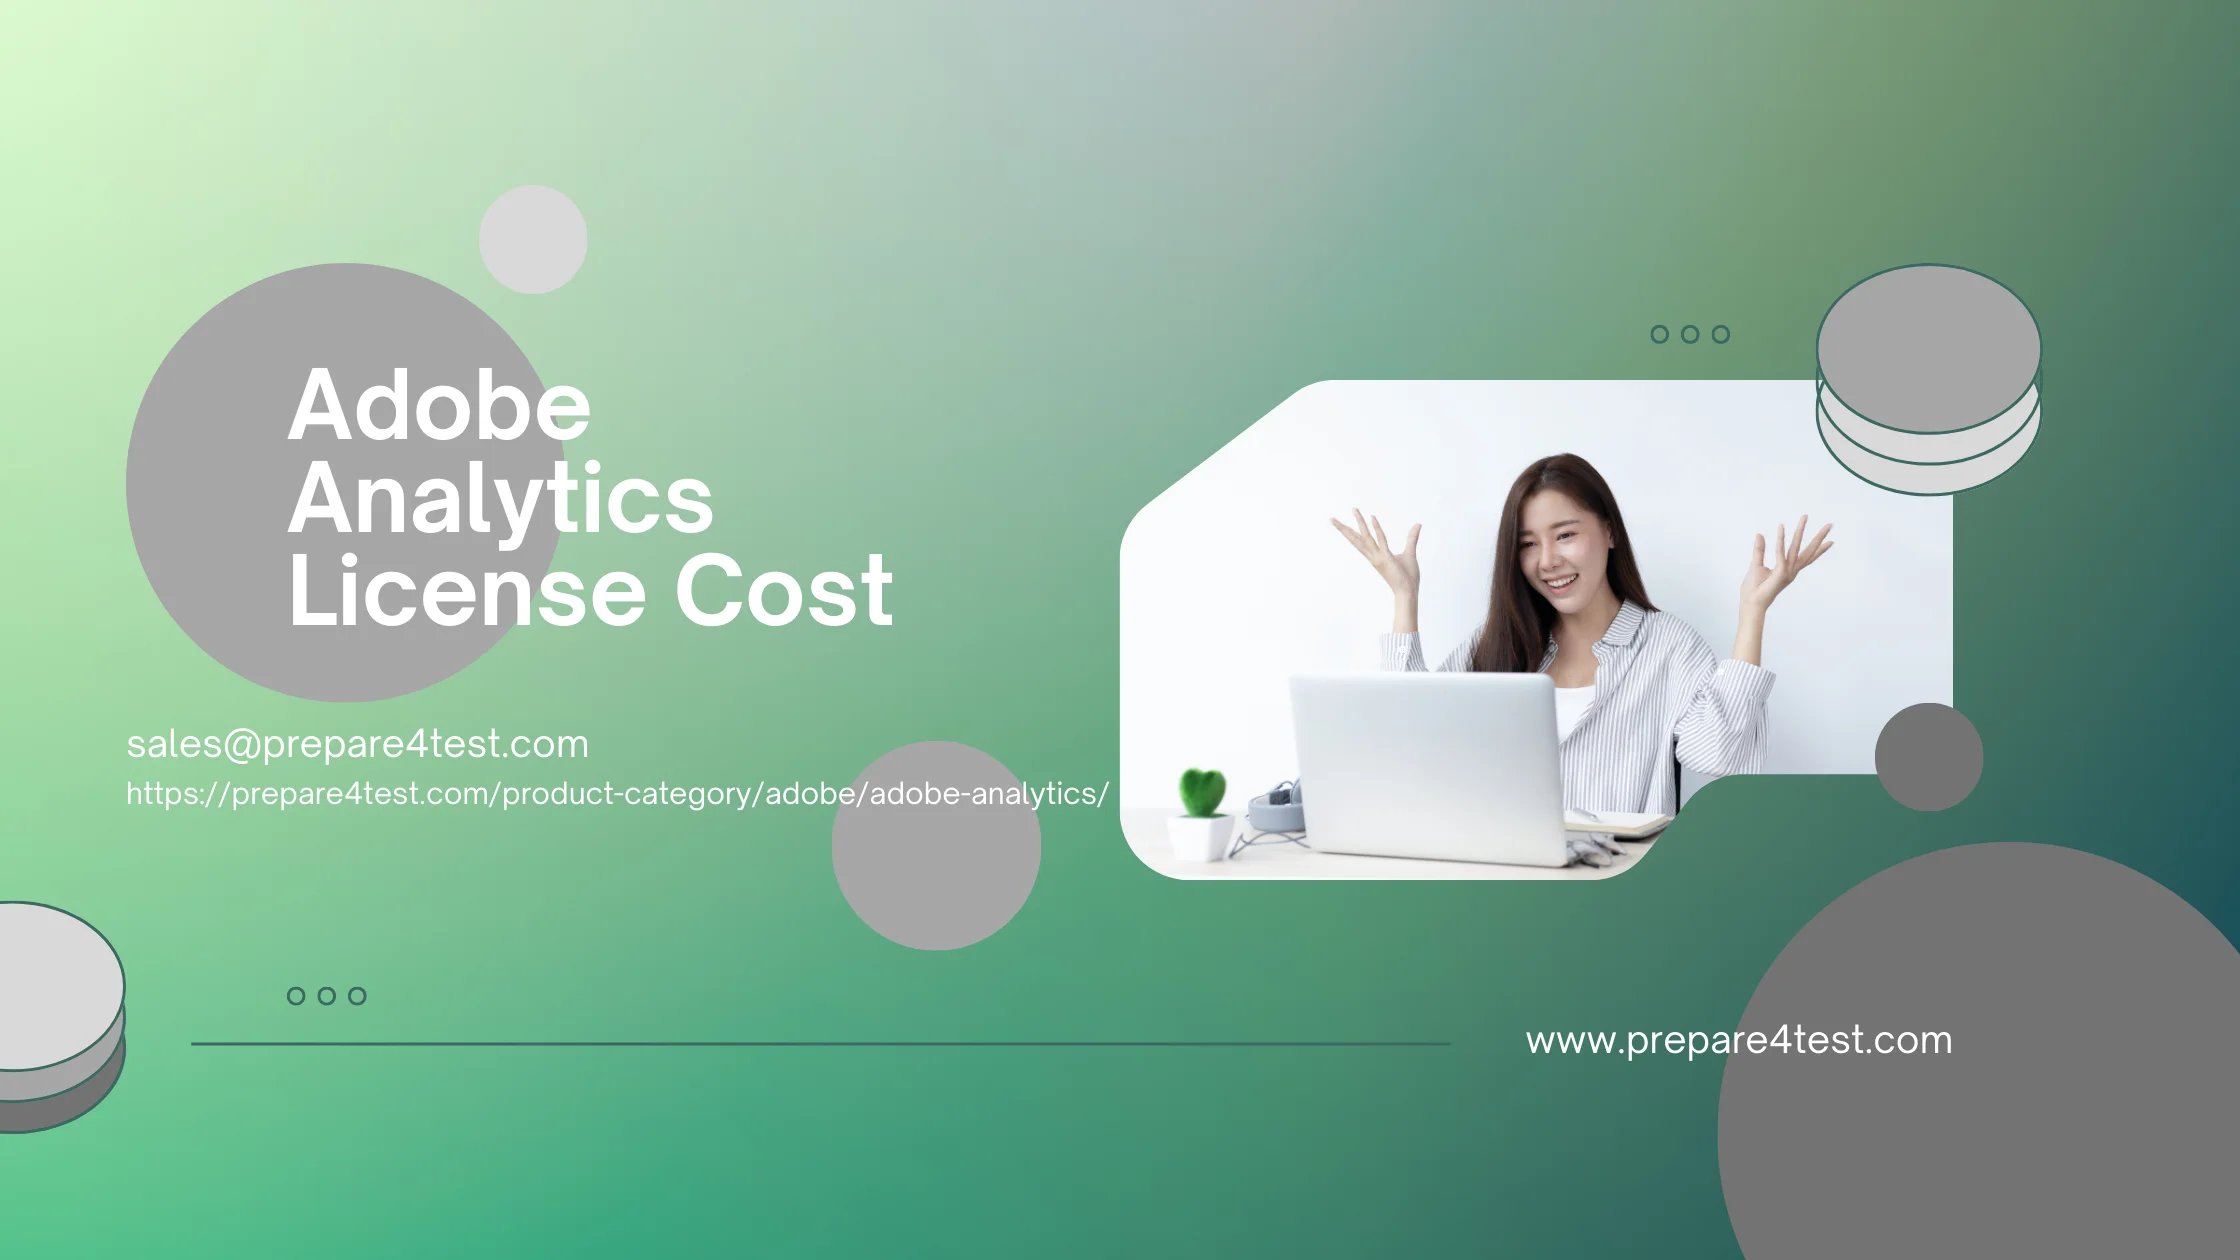 Adobe Analytics License Cost